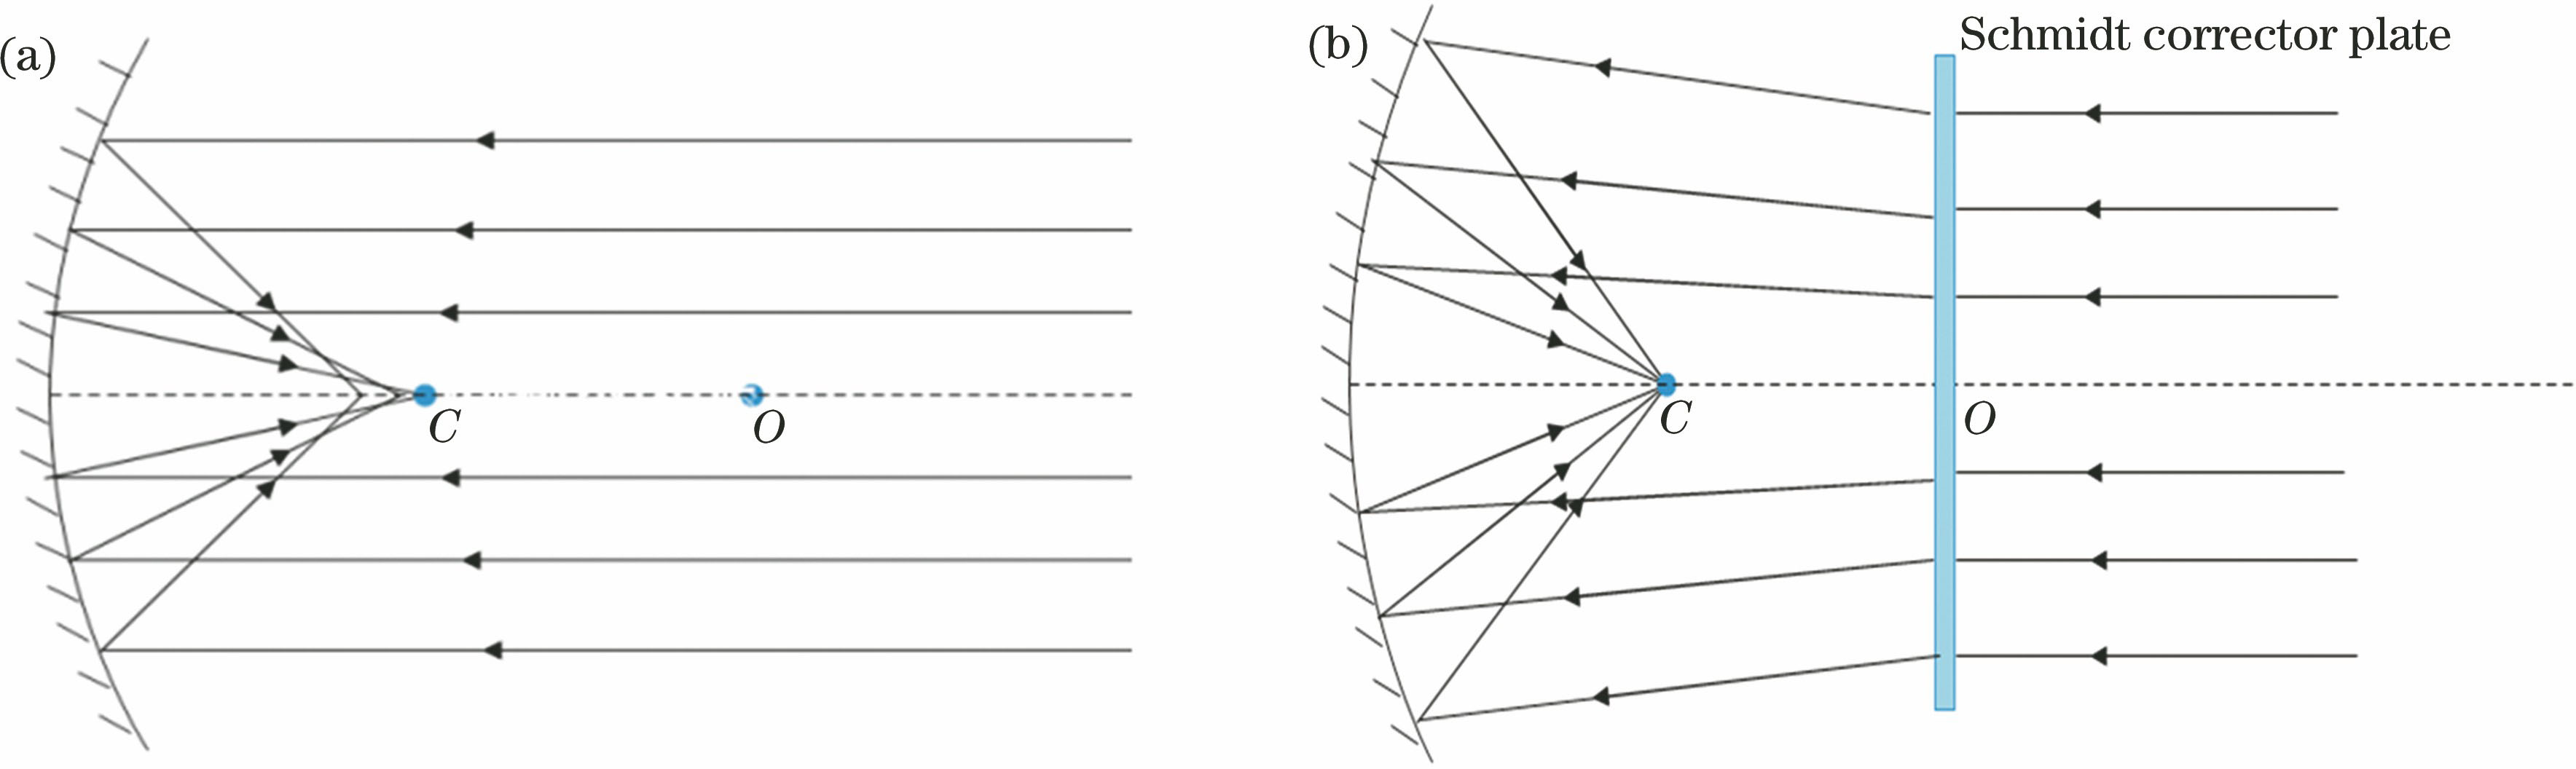 Schematics of aberration. (a) Spherical reflector; (b) compensation using Schmidt corrector plate